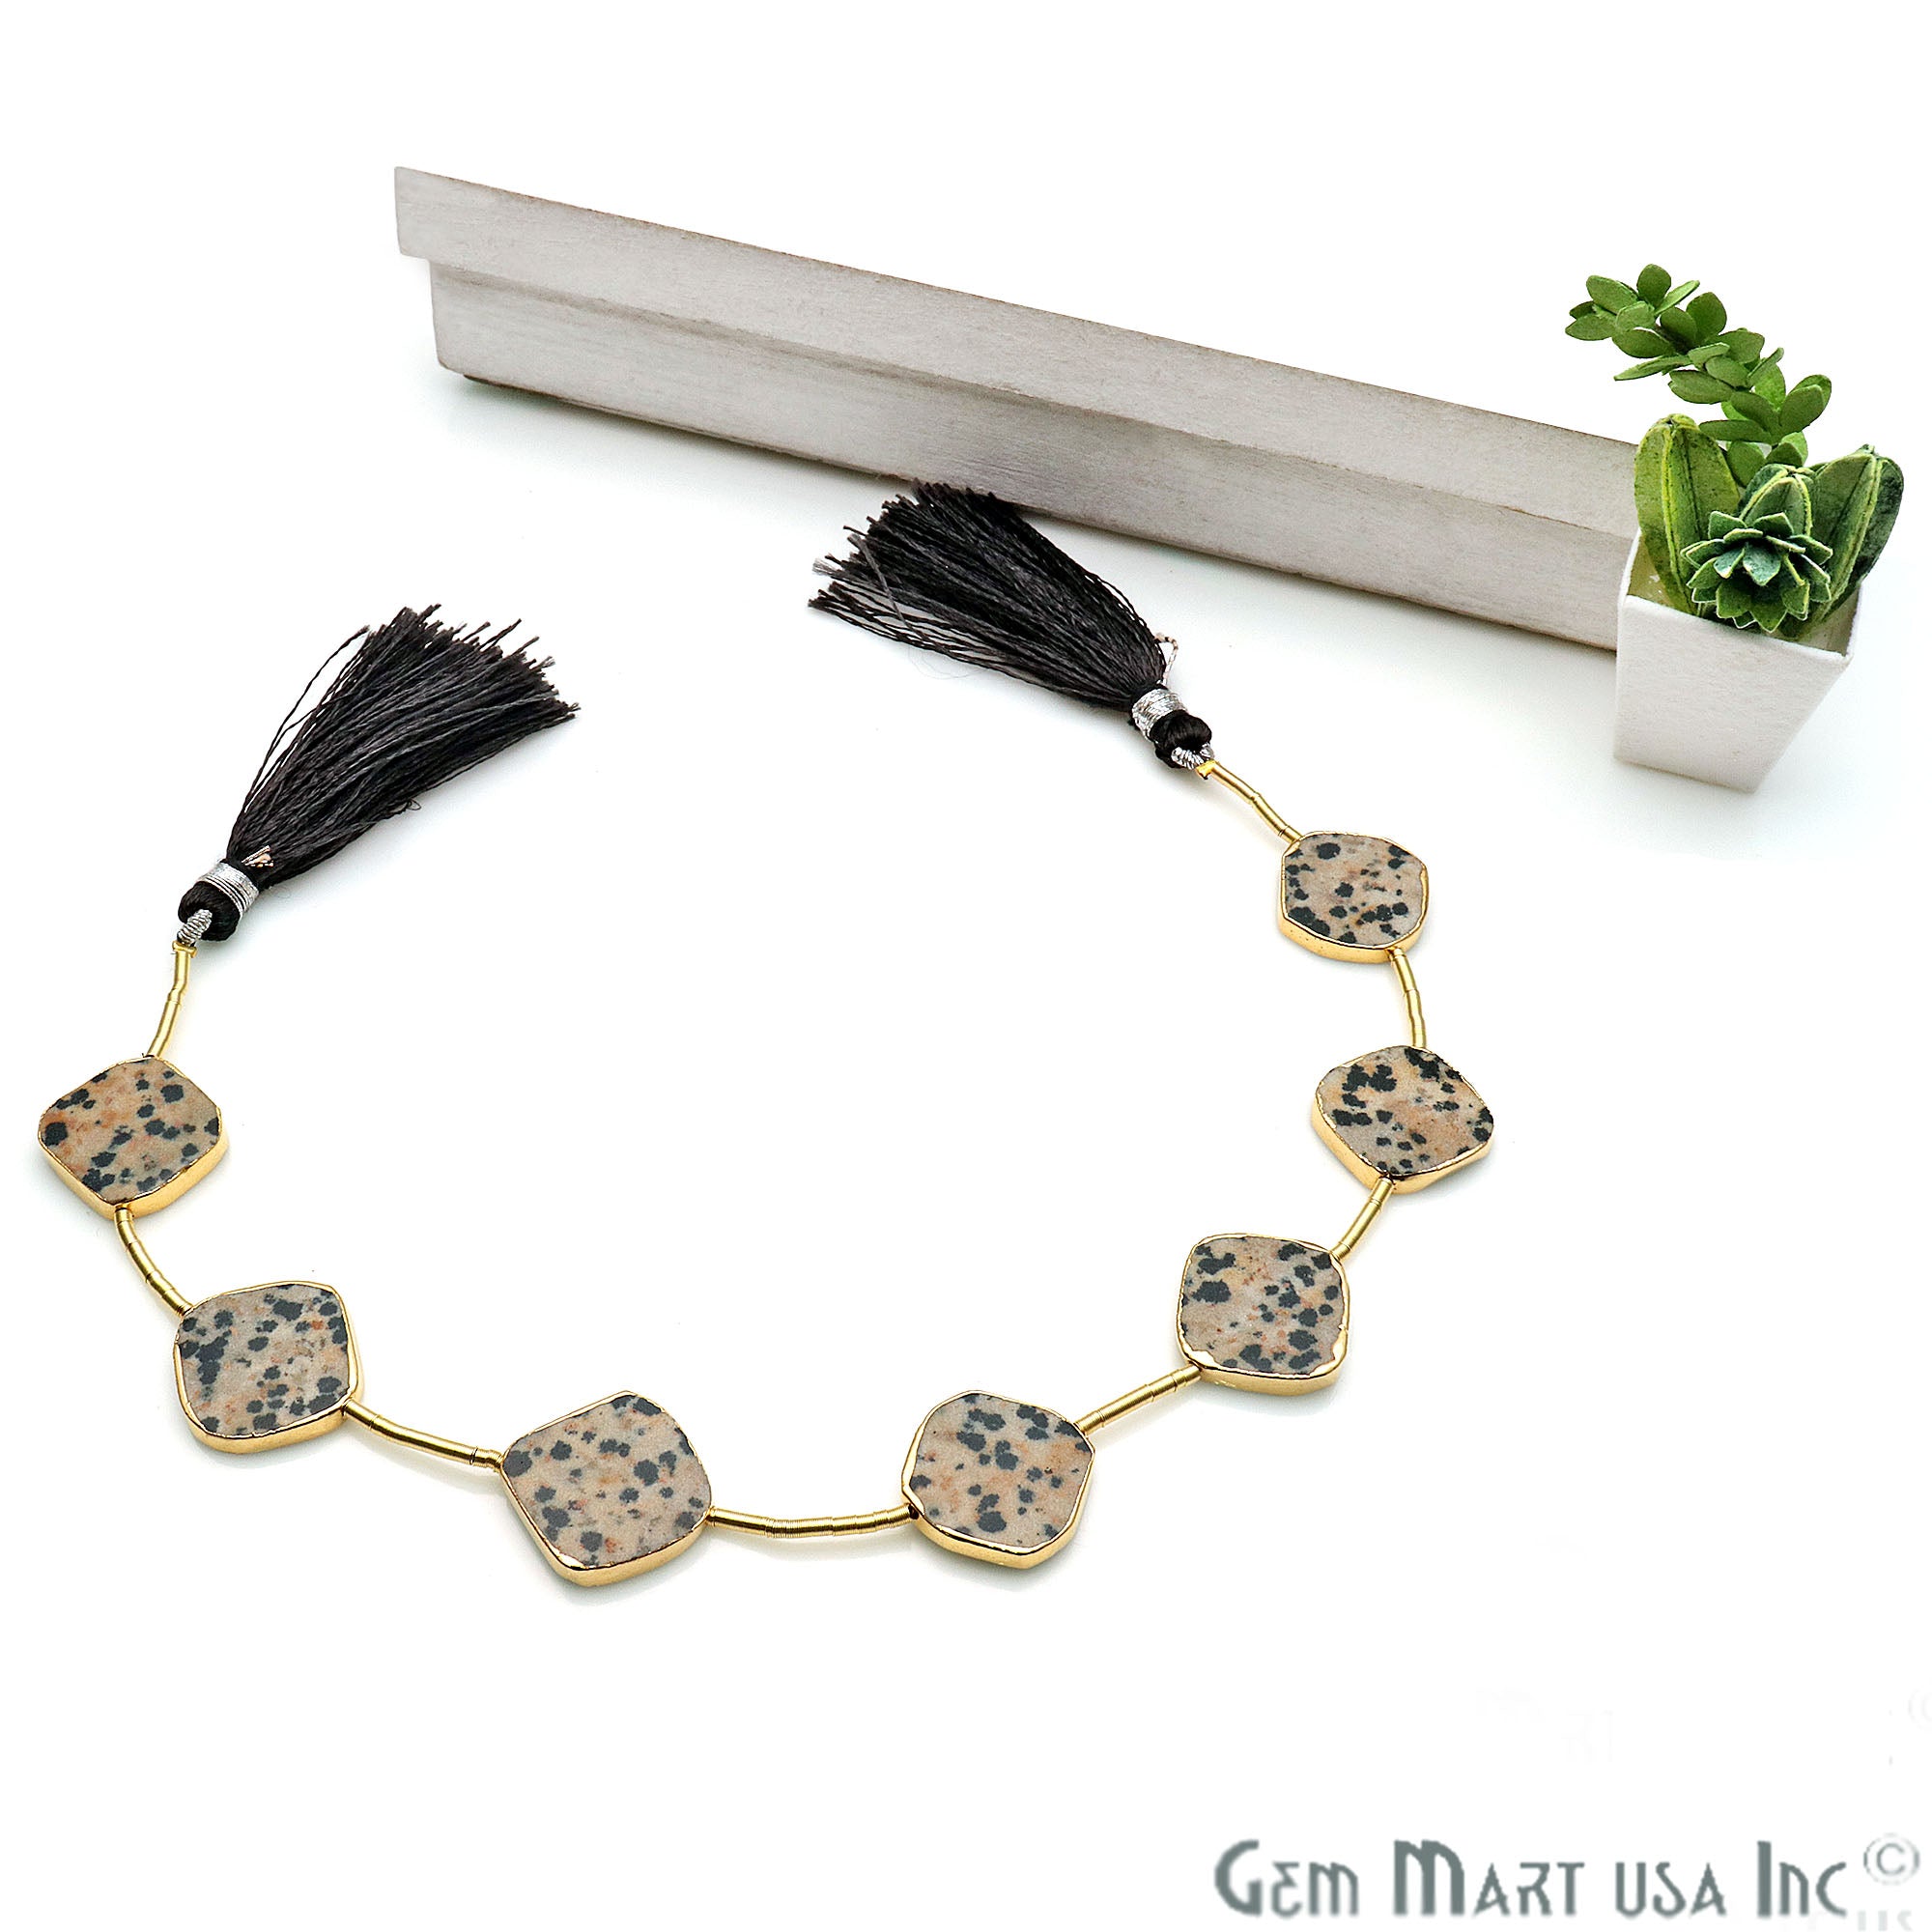 Dalmation Jasper Free Form 18x15mm Gold Edged Crafting Beads Gemstone Strands 9INCH - GemMartUSA